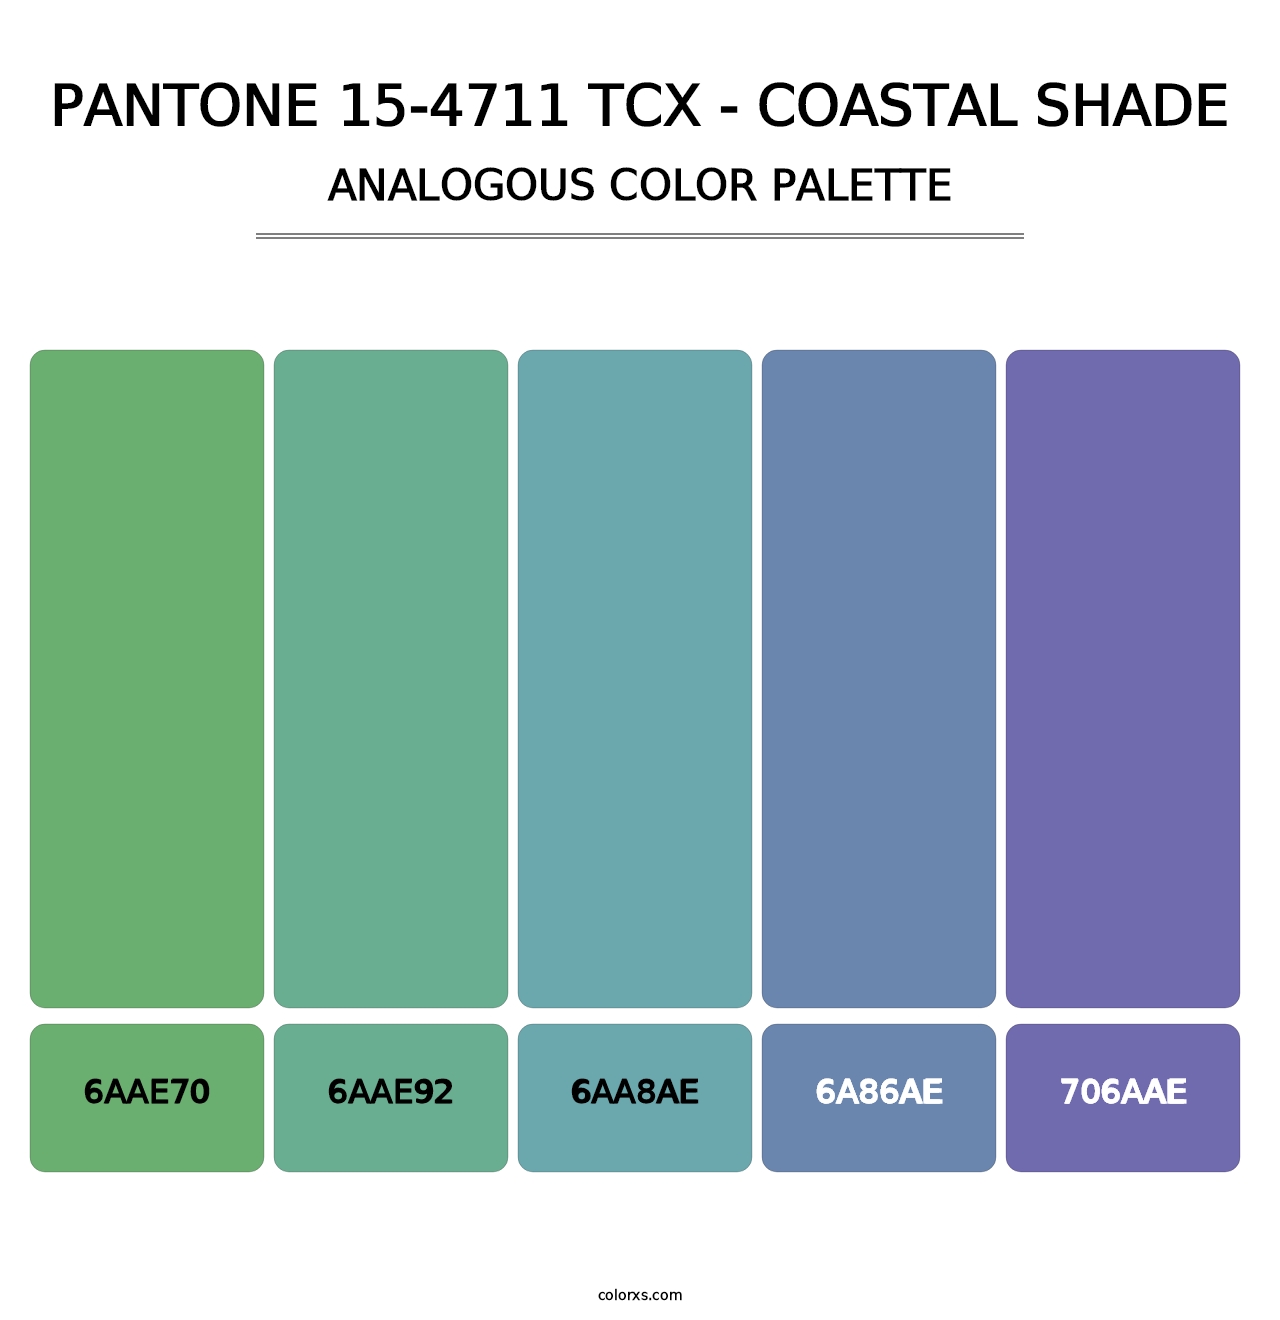 PANTONE 15-4711 TCX - Coastal Shade - Analogous Color Palette